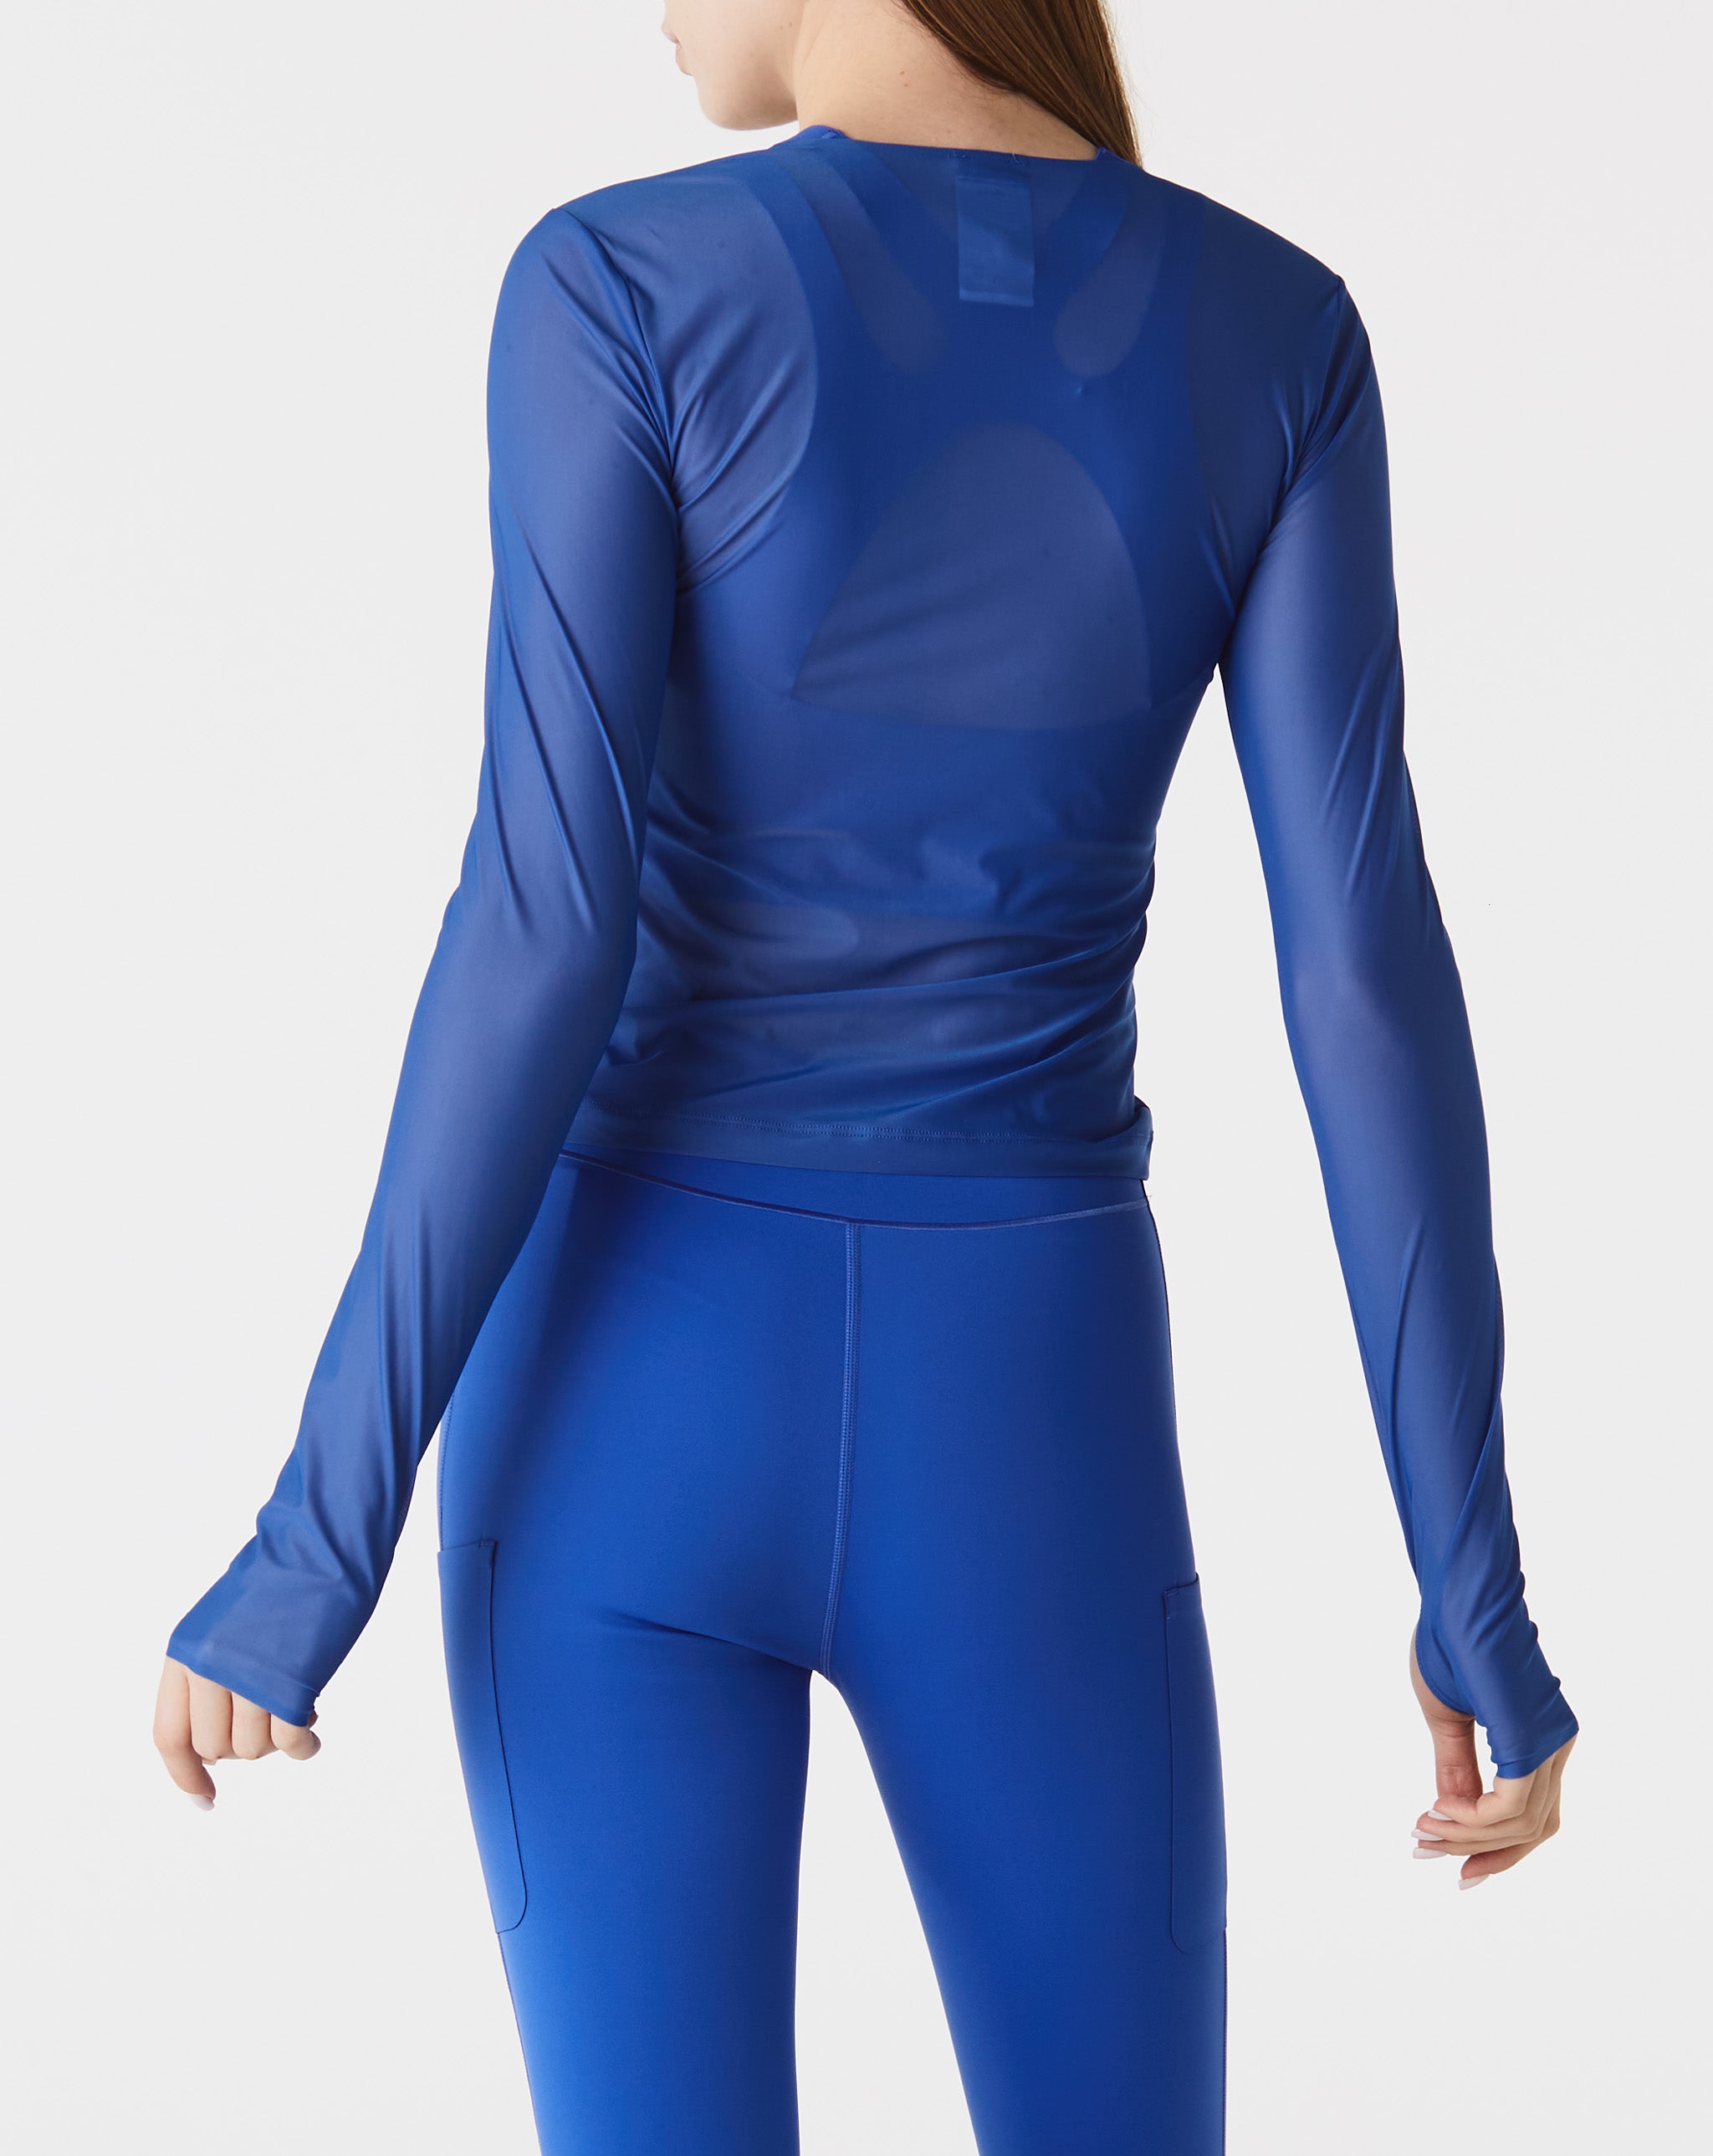 Nike Women's FutureMove Dri-FIT Long-Sleeve Sheer Top  - Cheap Atelier-lumieres Jordan outlet